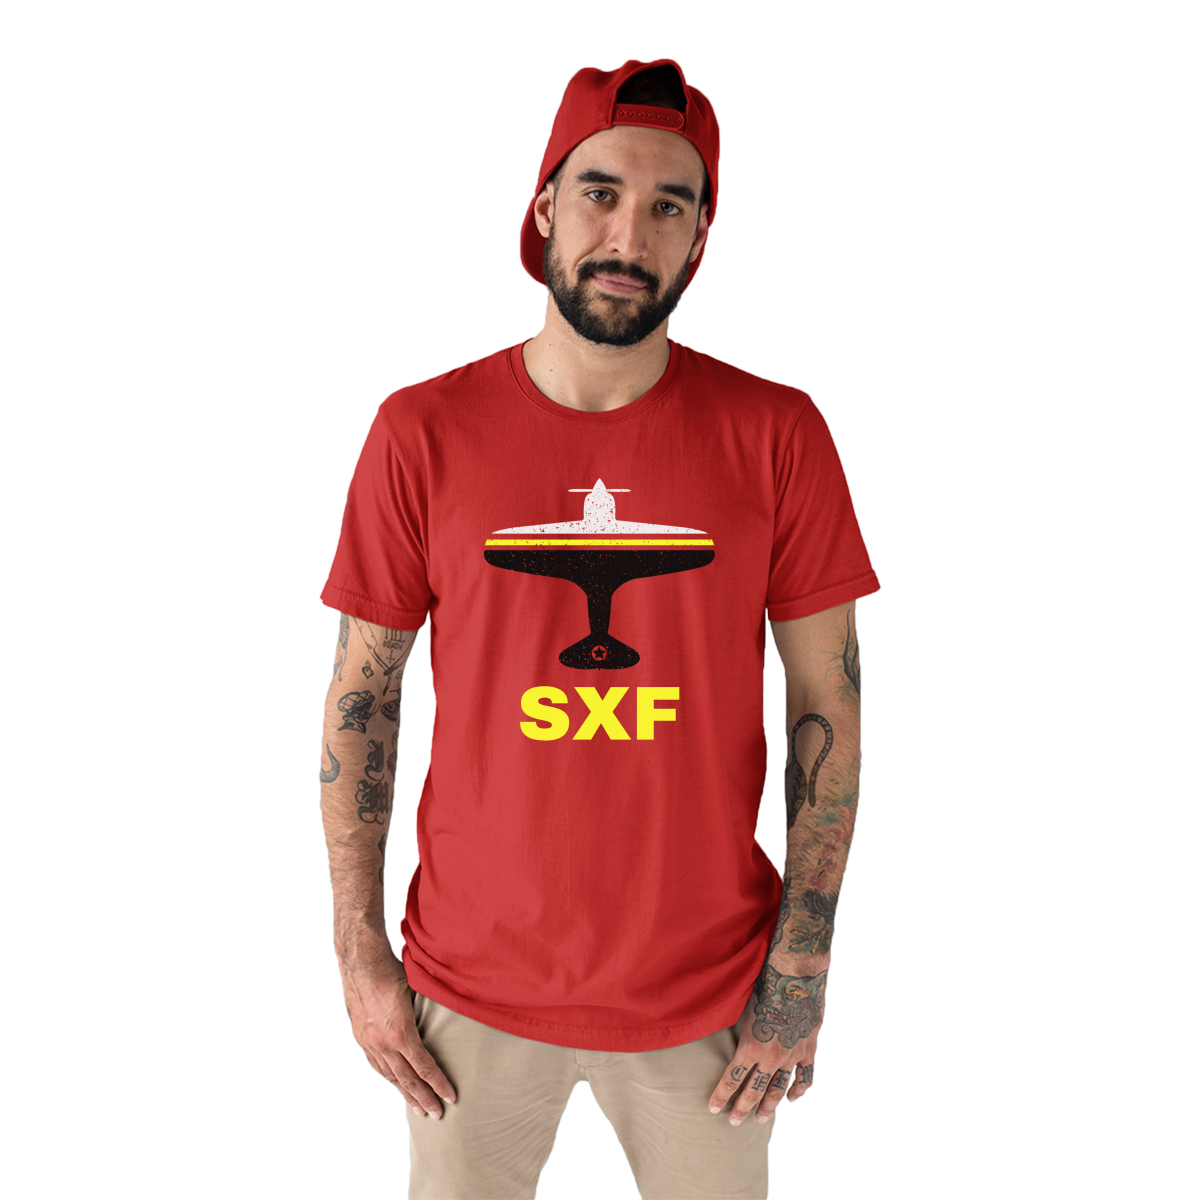 Fly Berlin SXF Airport Men's T-shirt | Red